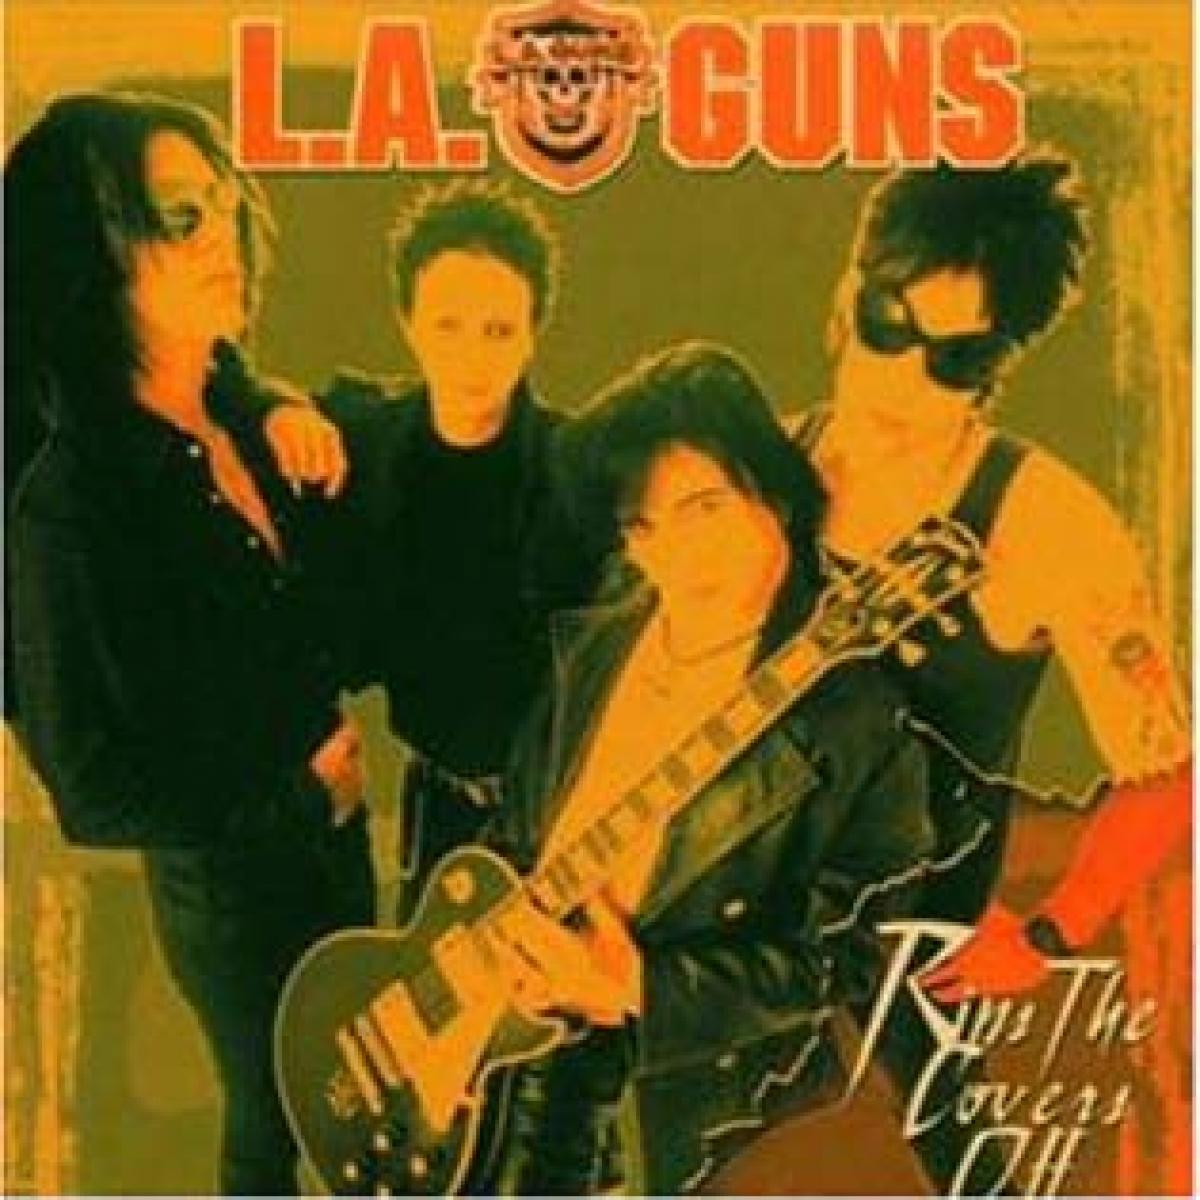 l.a. guns covered in guns